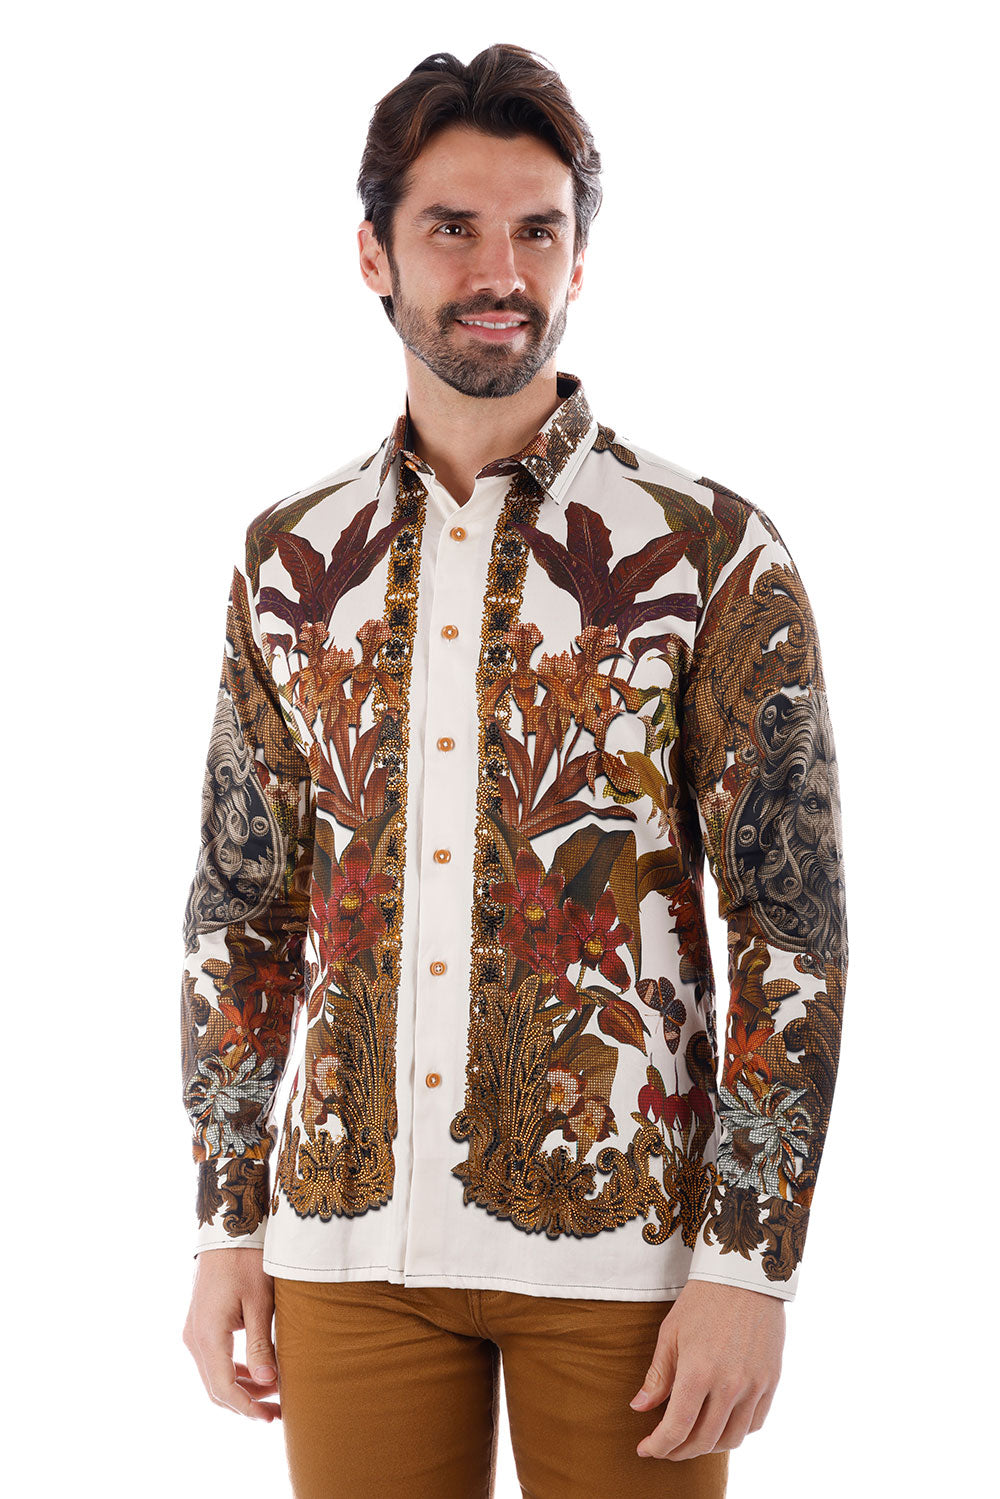 BARABAS Men's Rhinestone Floral Lion Long Sleeve Shirts 3SPR428 Cream